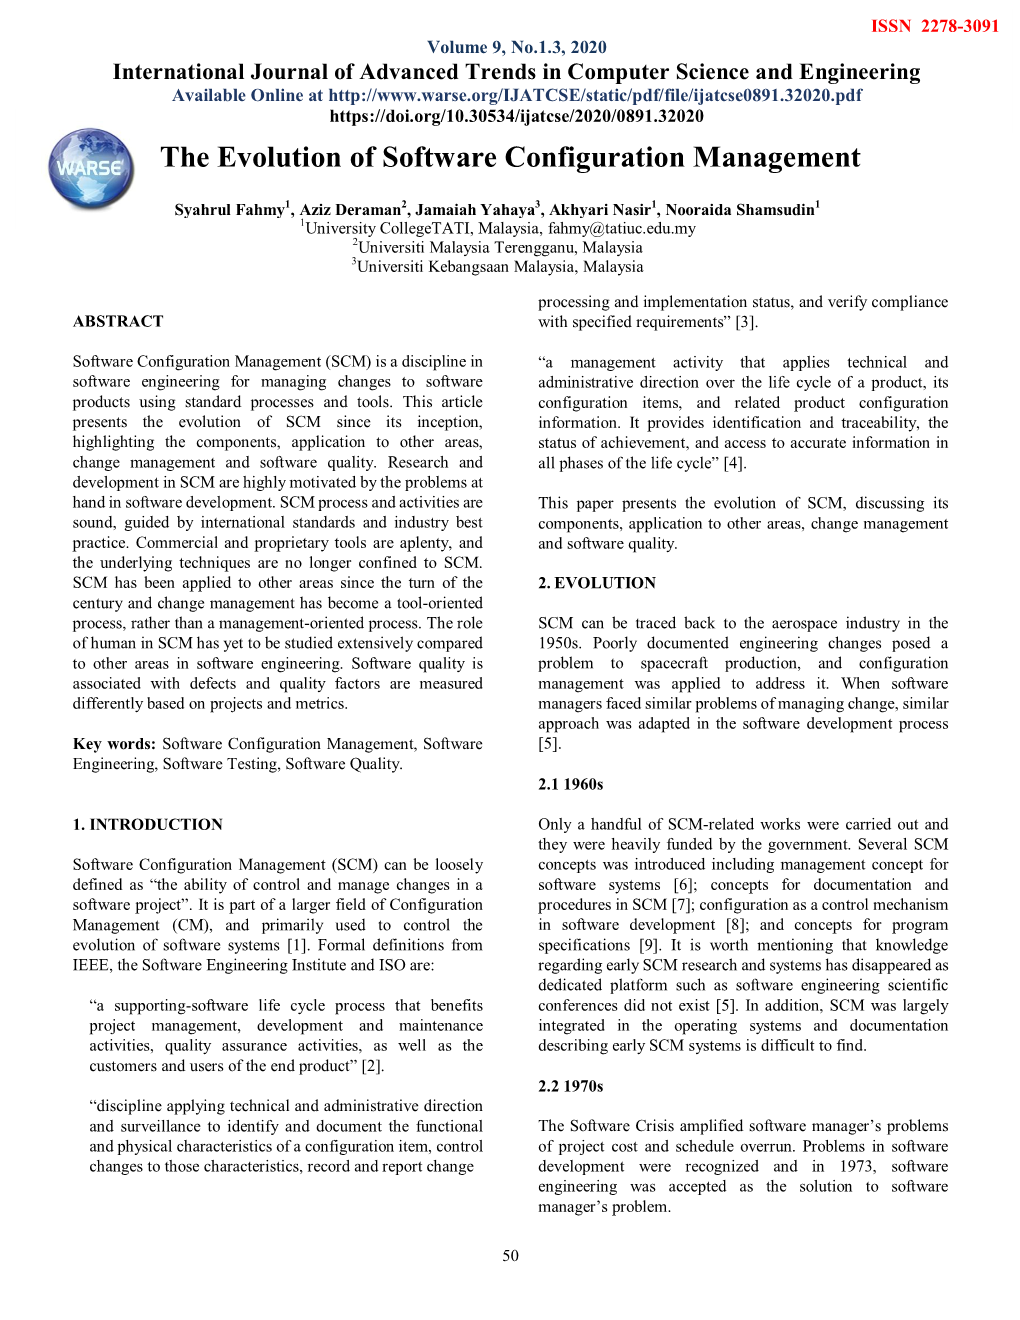 The Evolution of Software Configuration Management